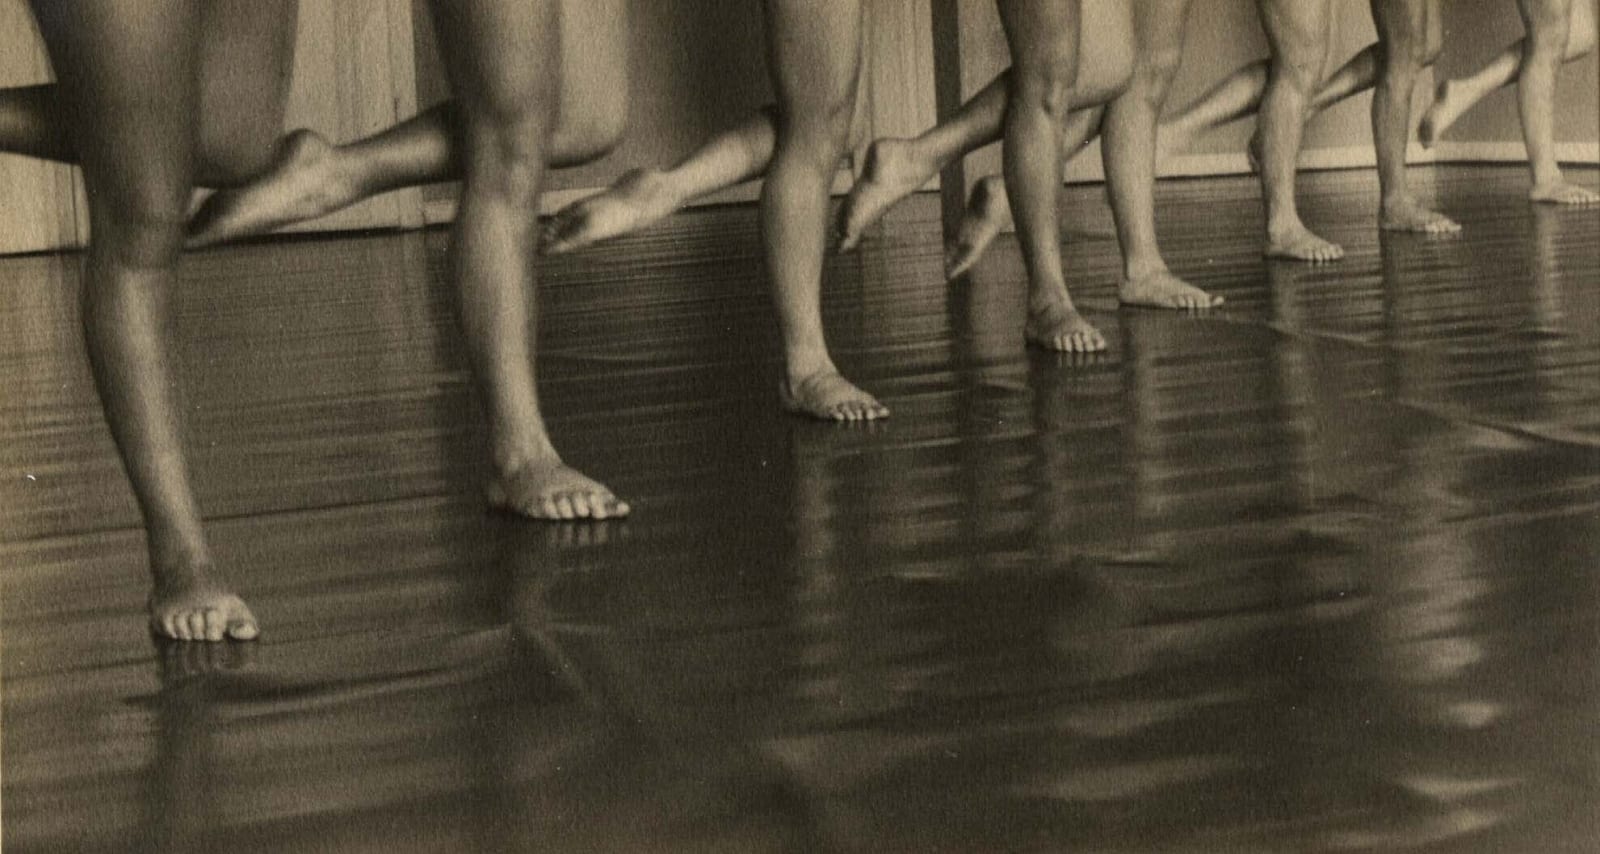 Ilse Bing photograph of dancers legs in sync from the Laban Dance School in Frankfurt